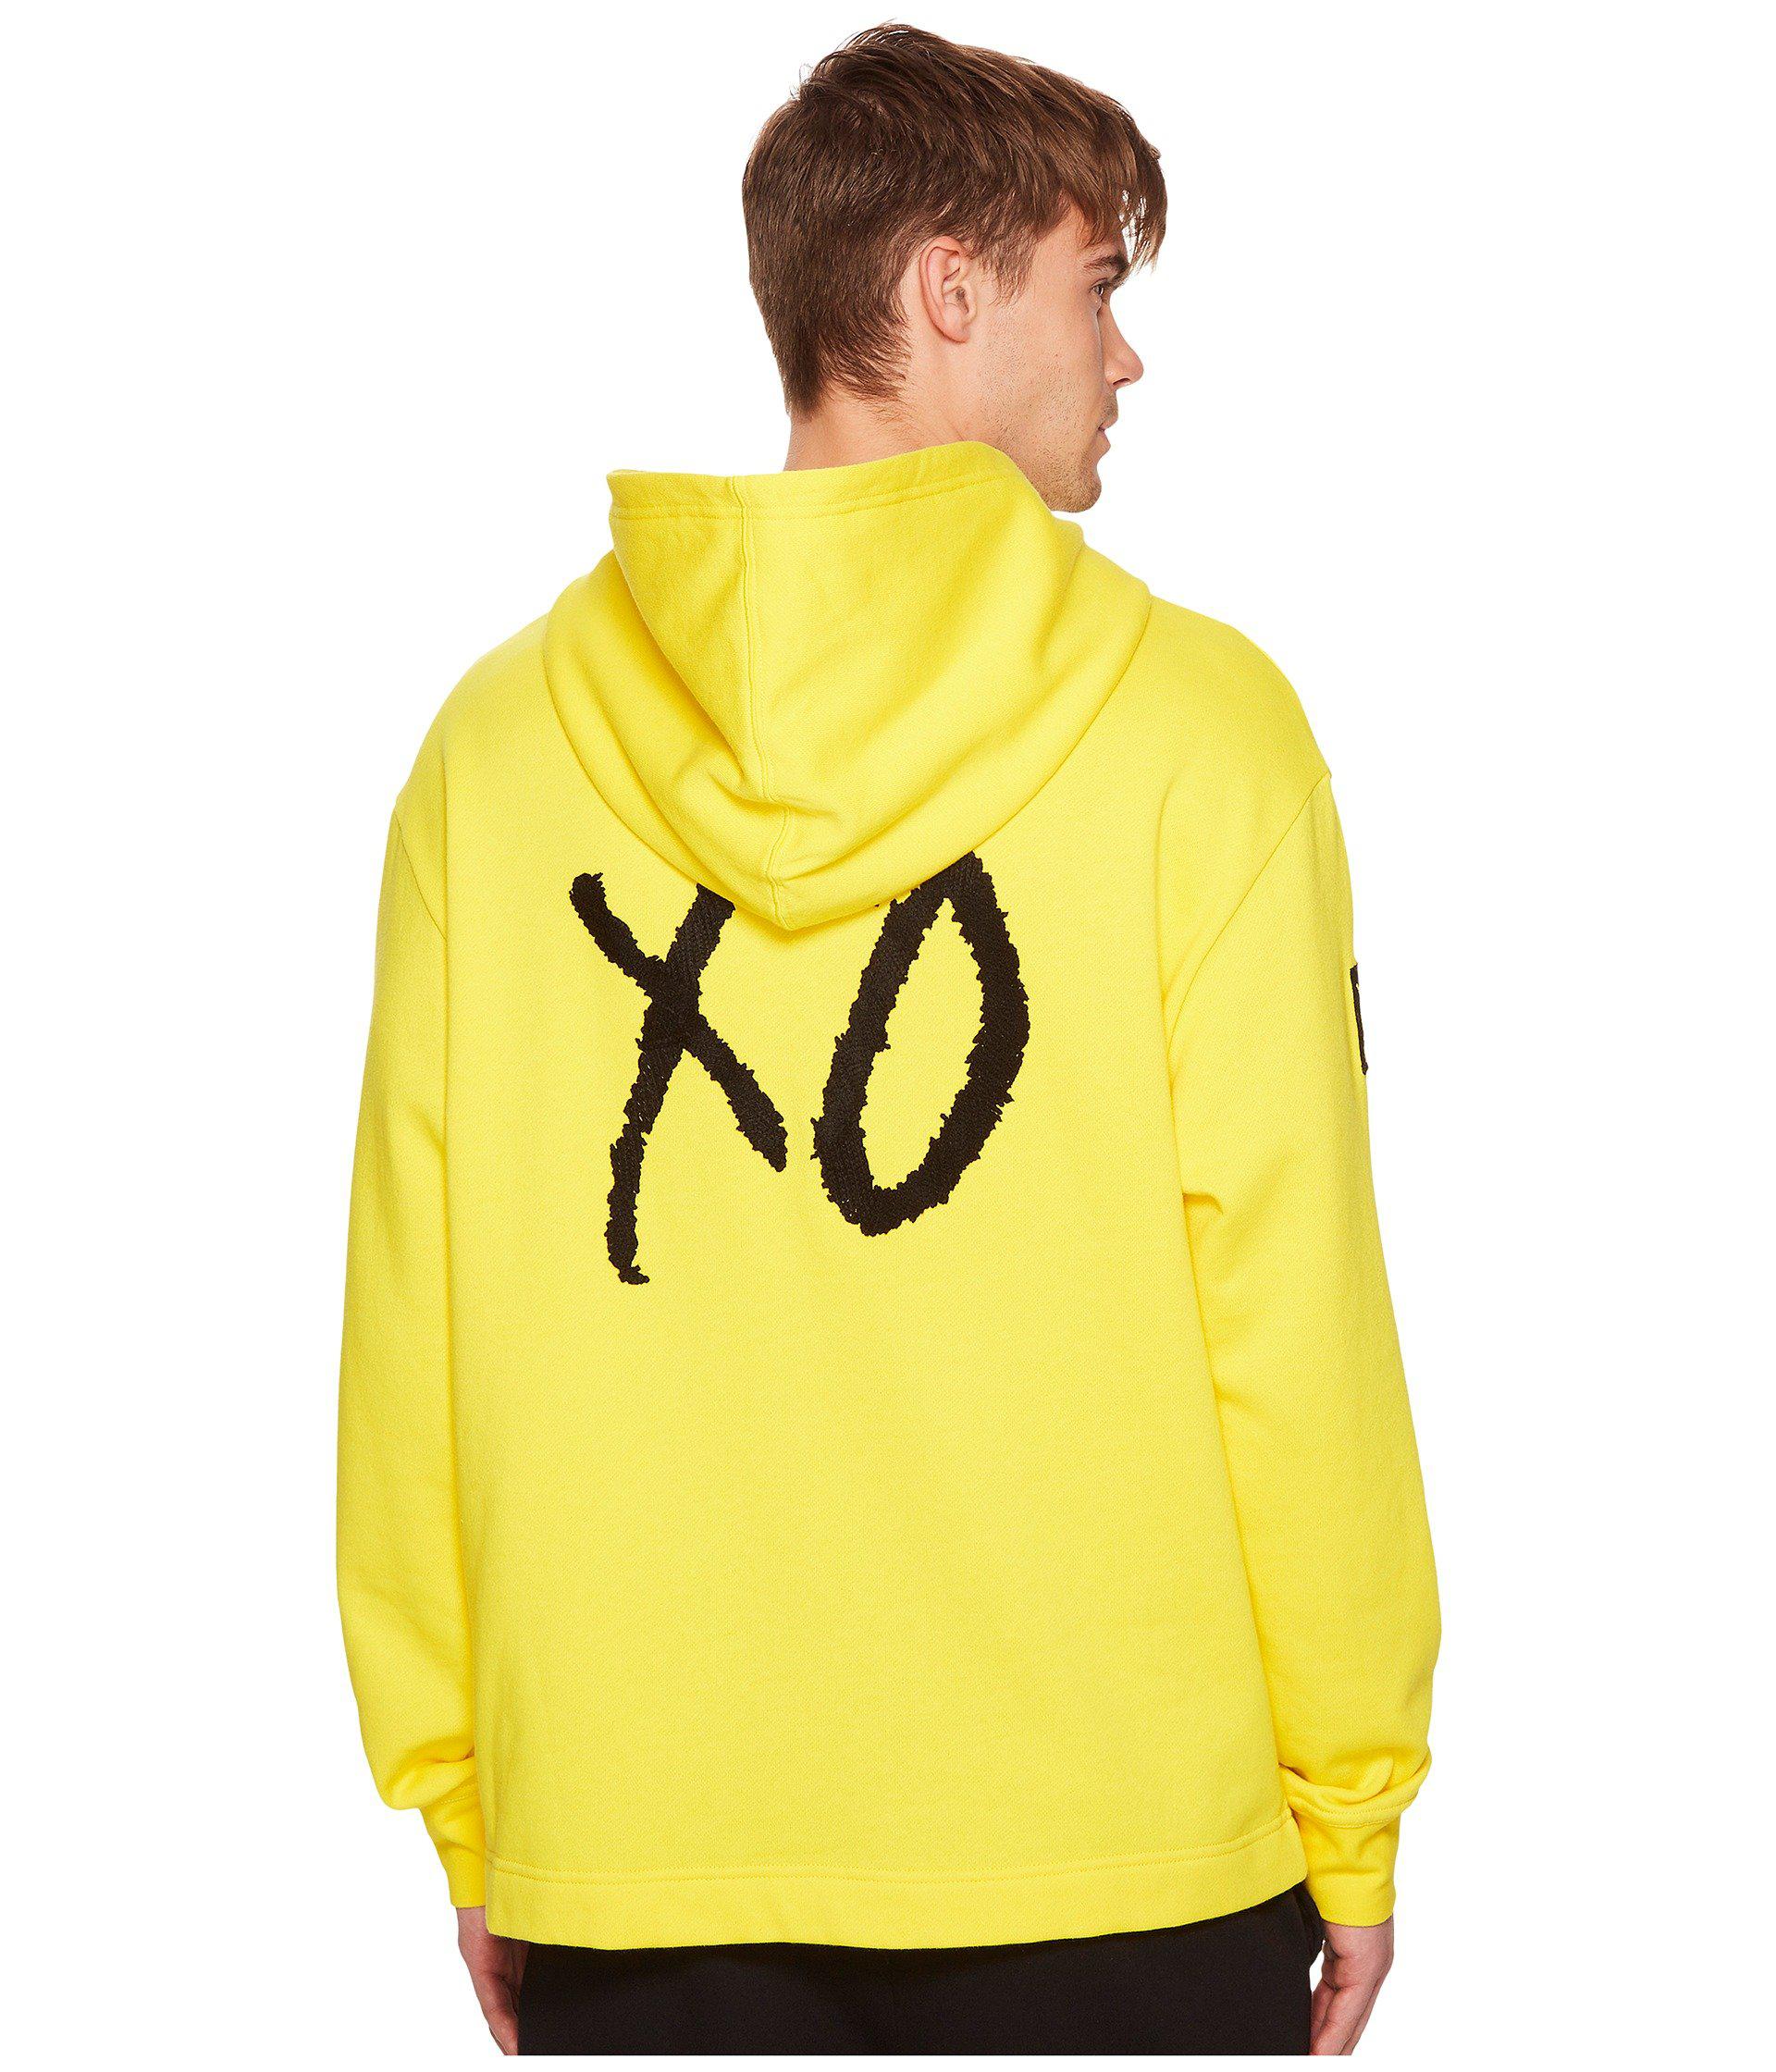 puma xo yellow hoodie Off 66% - sirinscrochet.com